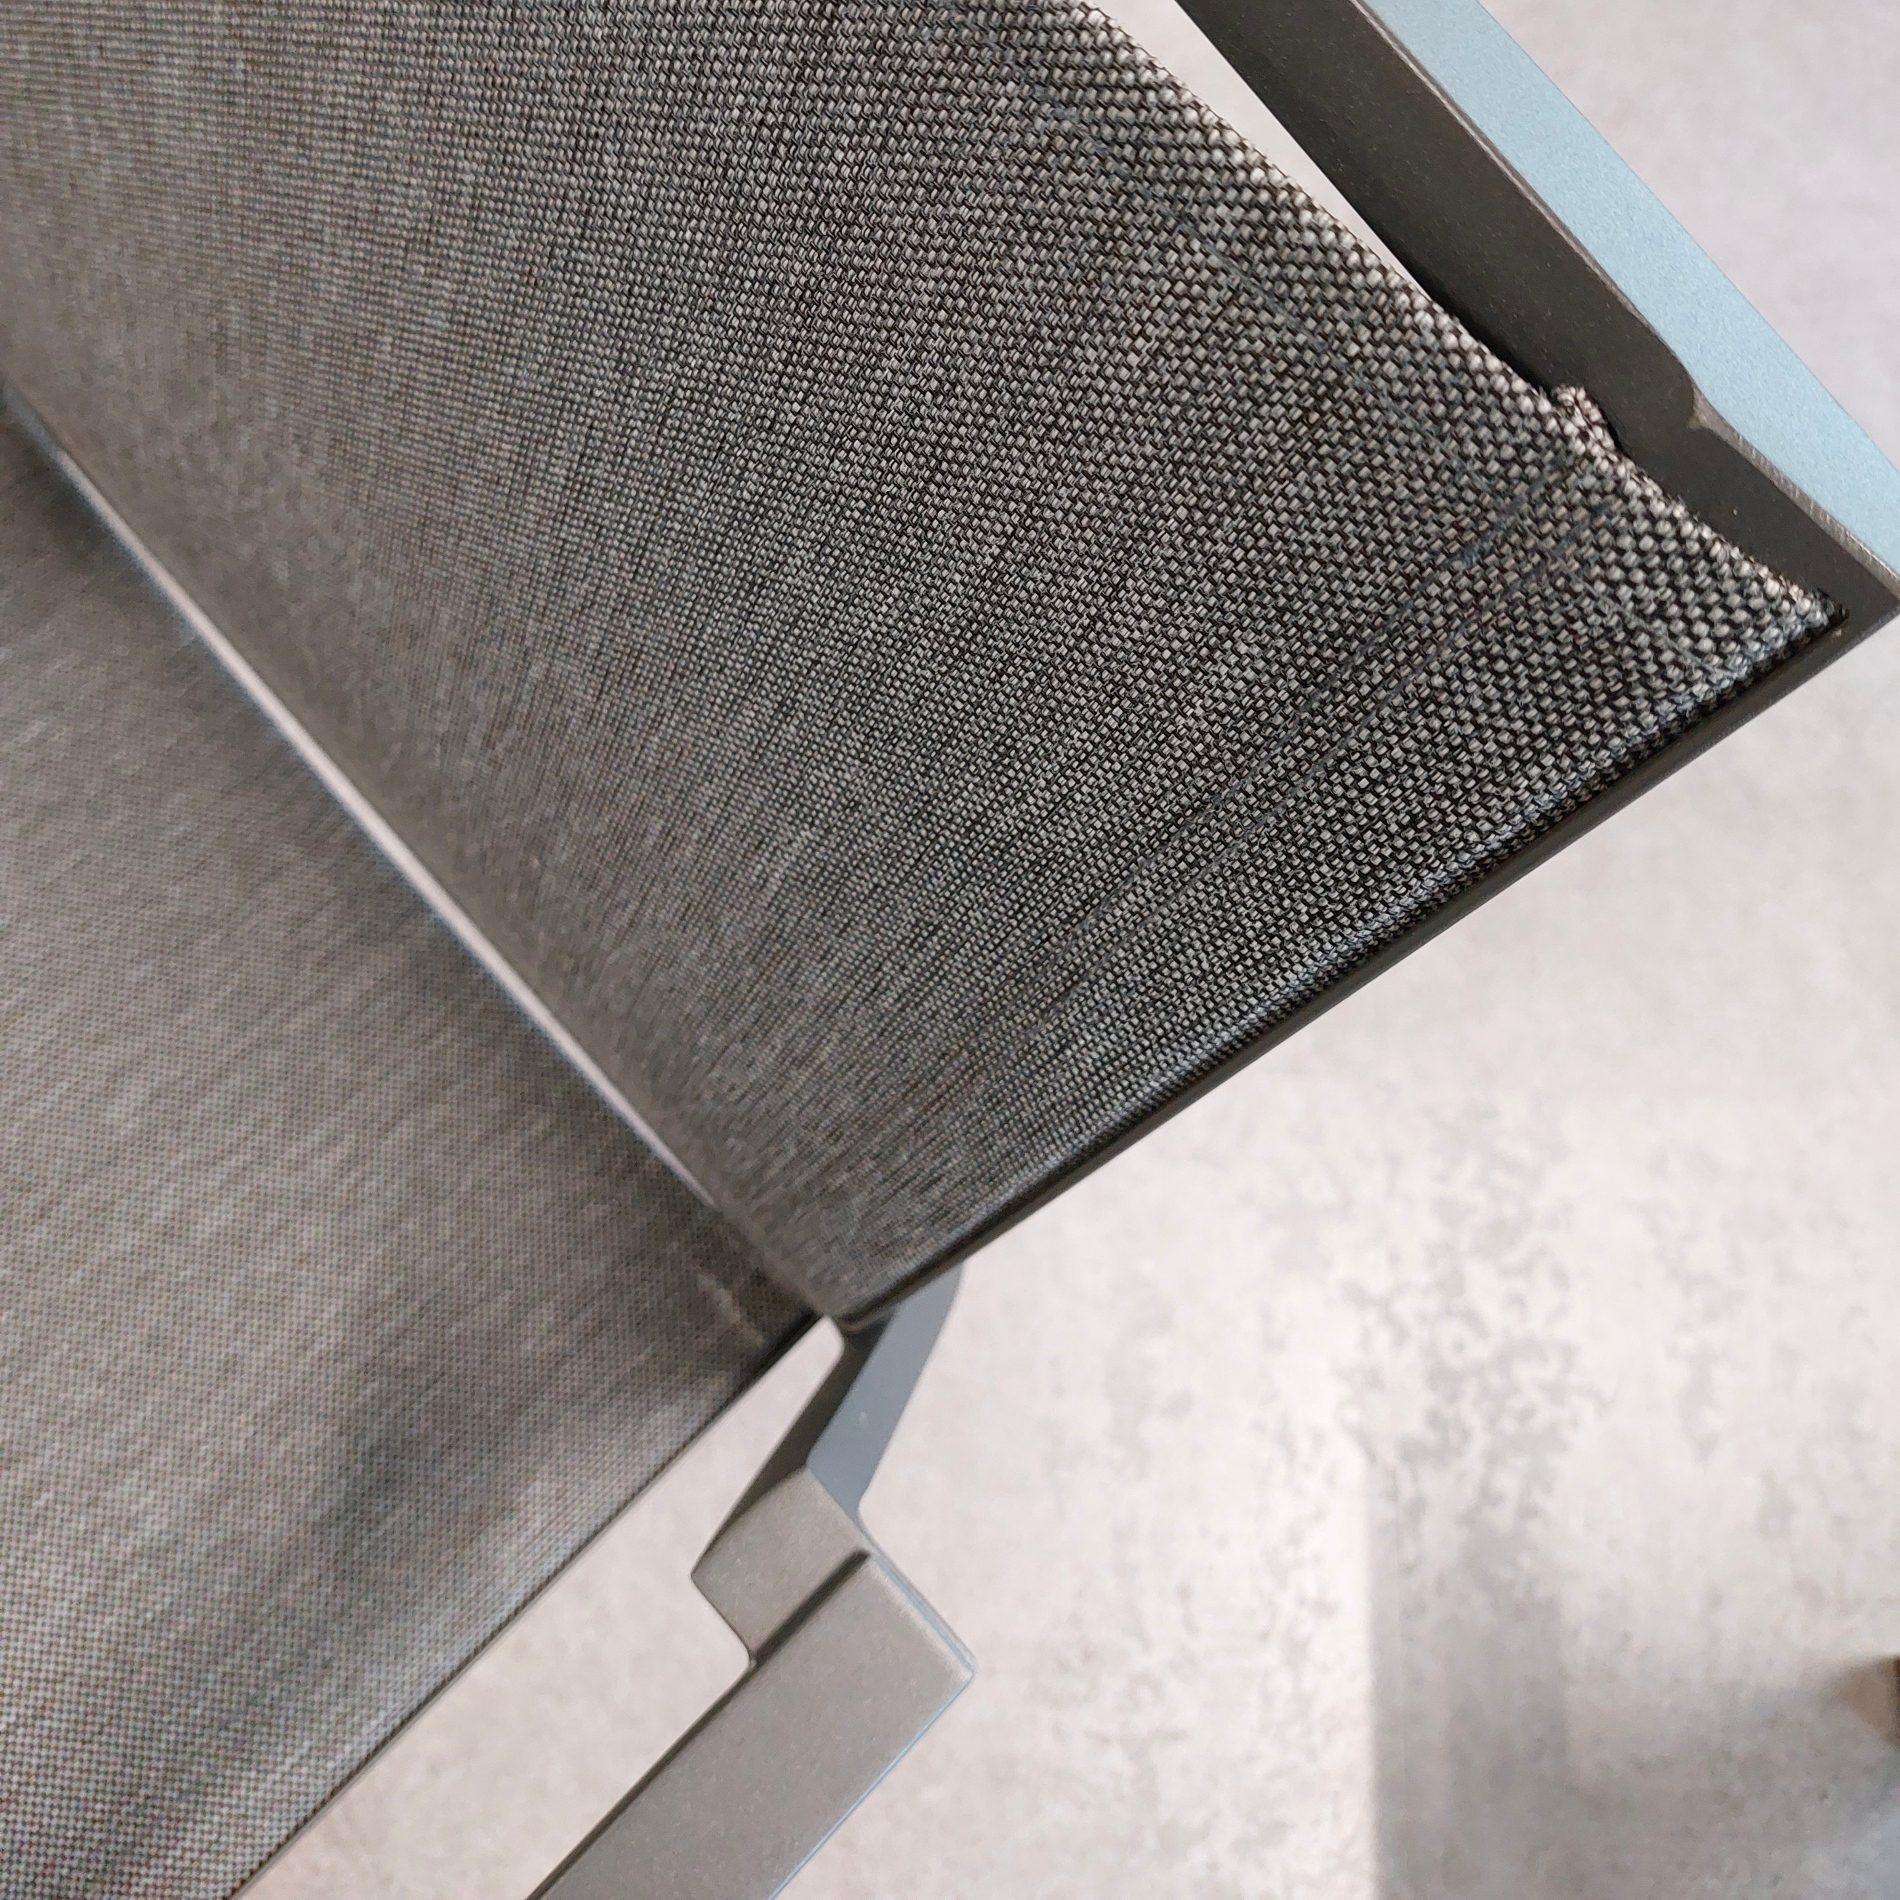 SIT Mobilia "Franco II" Stapelstuhl, Gestell Aluminium anthrazit, Sitzfläche Textilgewebe charcoal black, Armlehnen Aluminium anthrazit